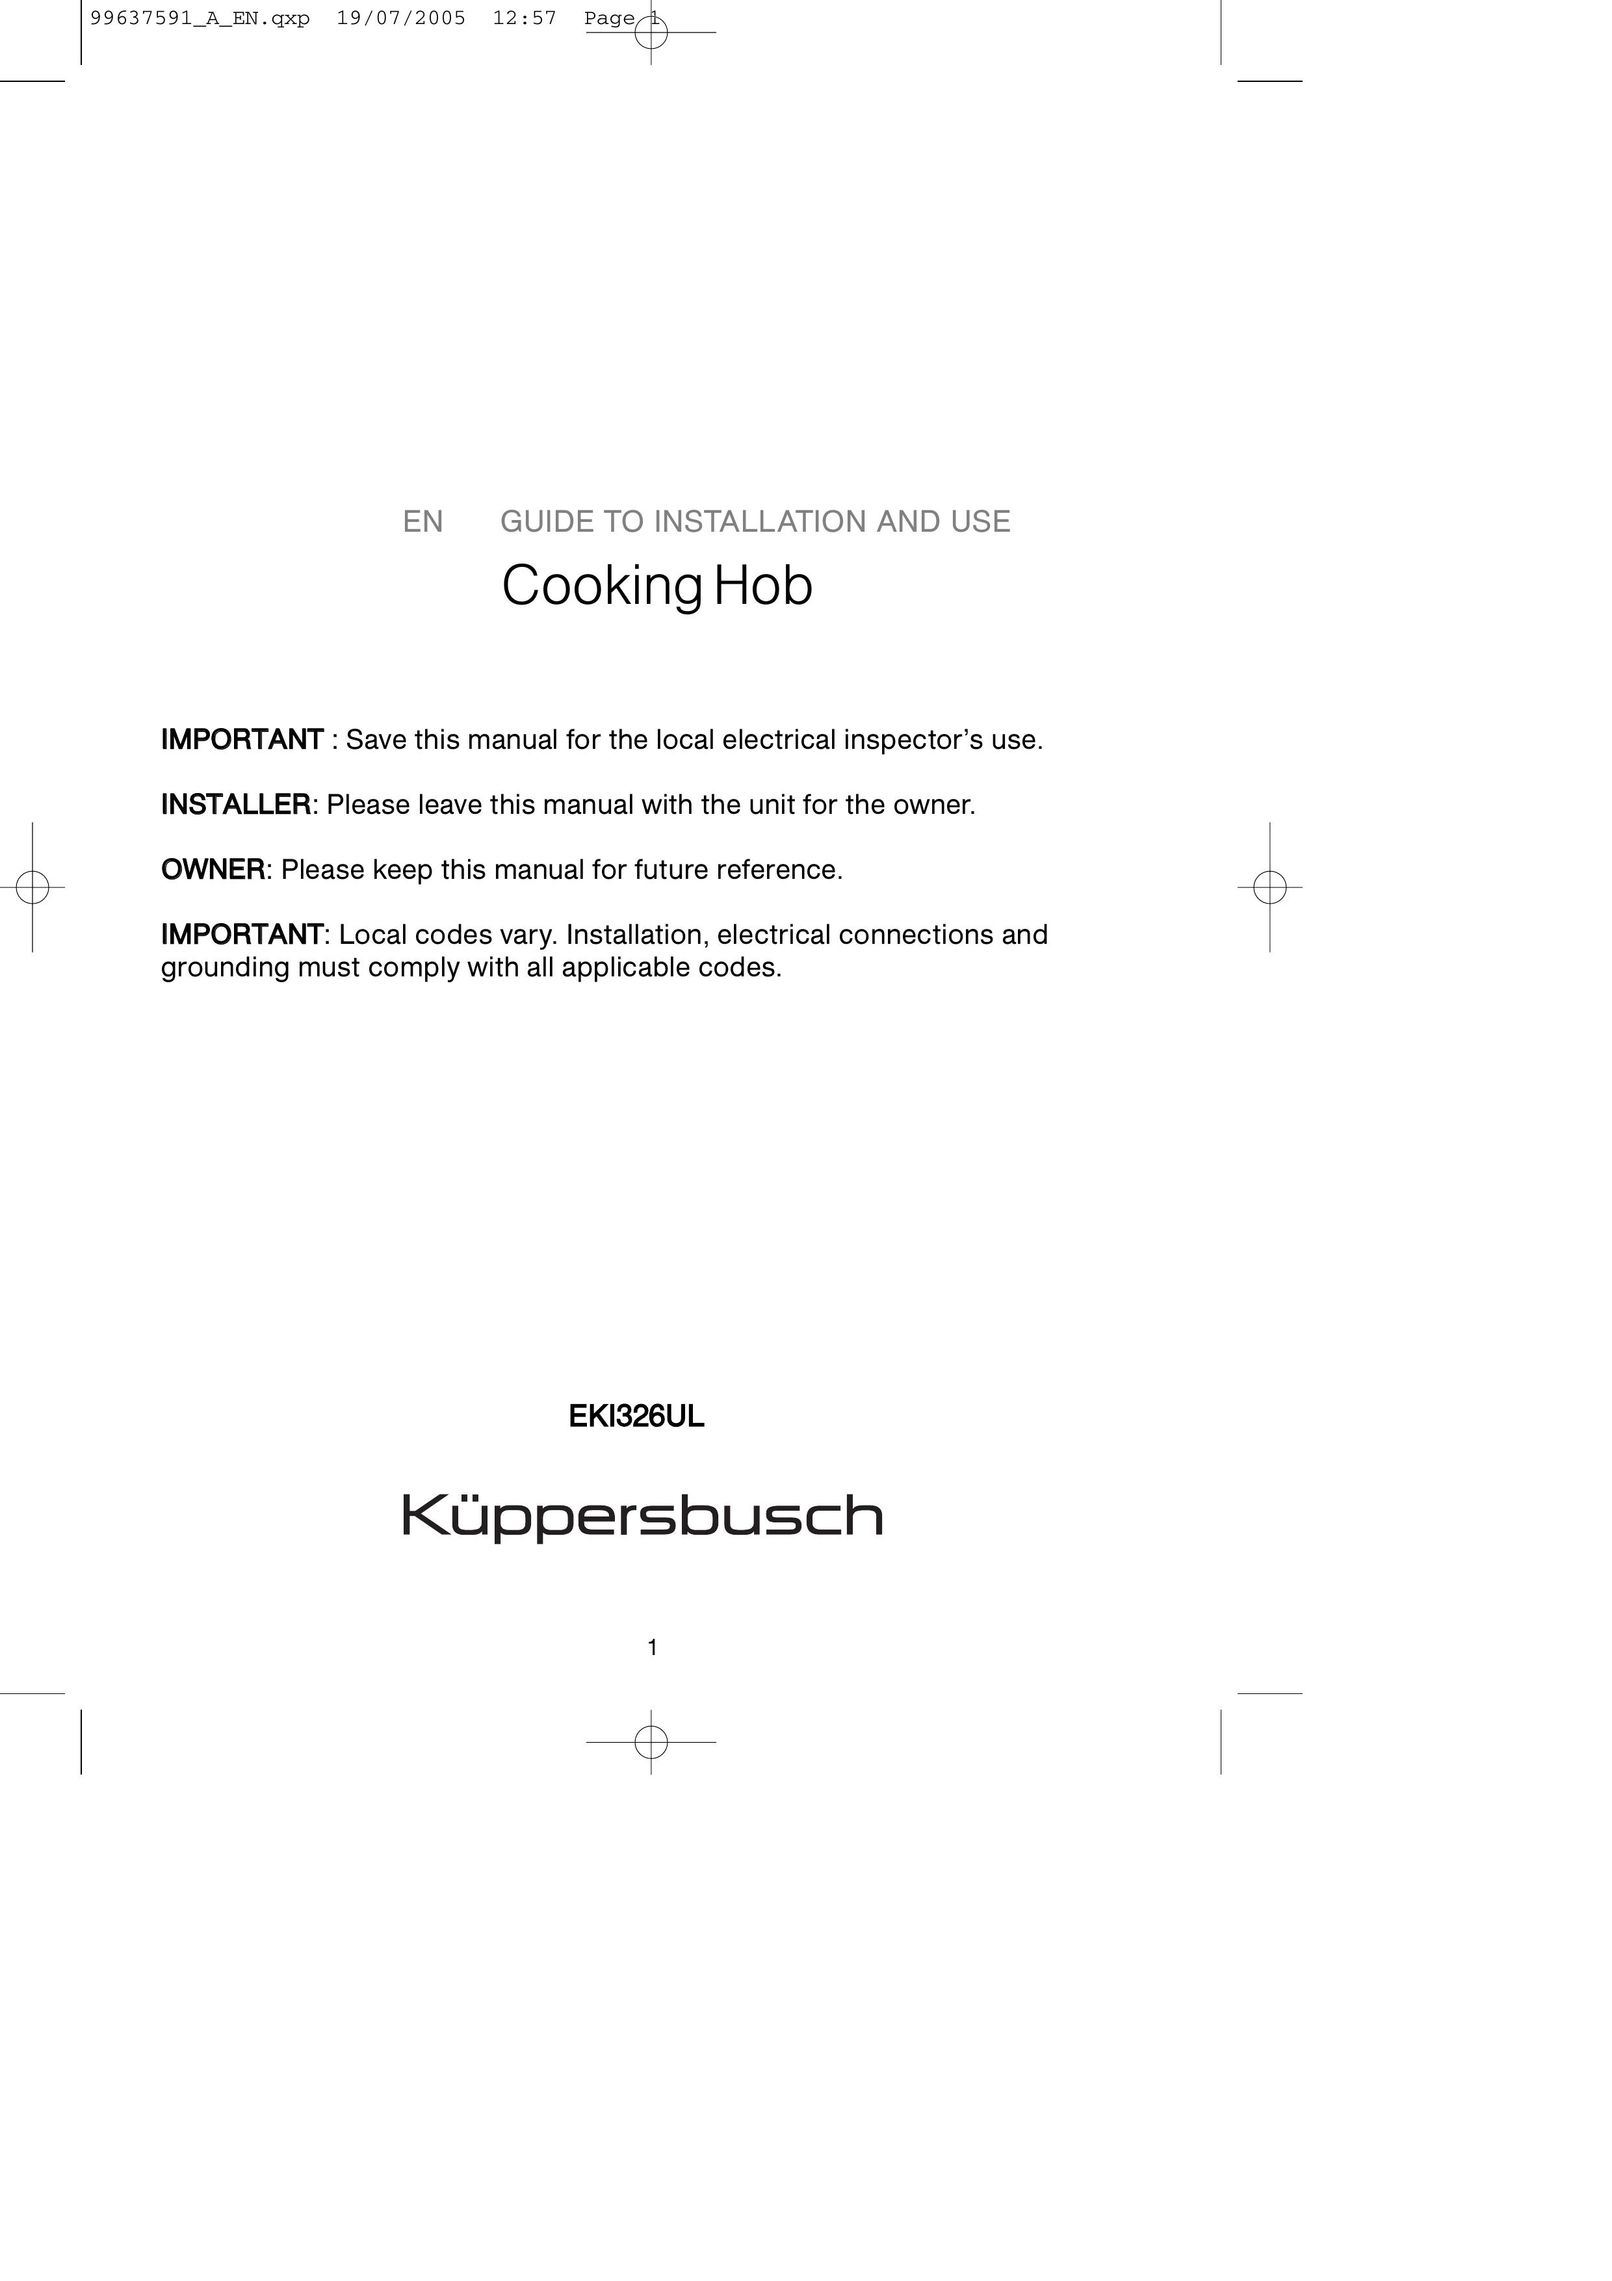 Kuppersbusch USA EKI326UL Oven User Manual